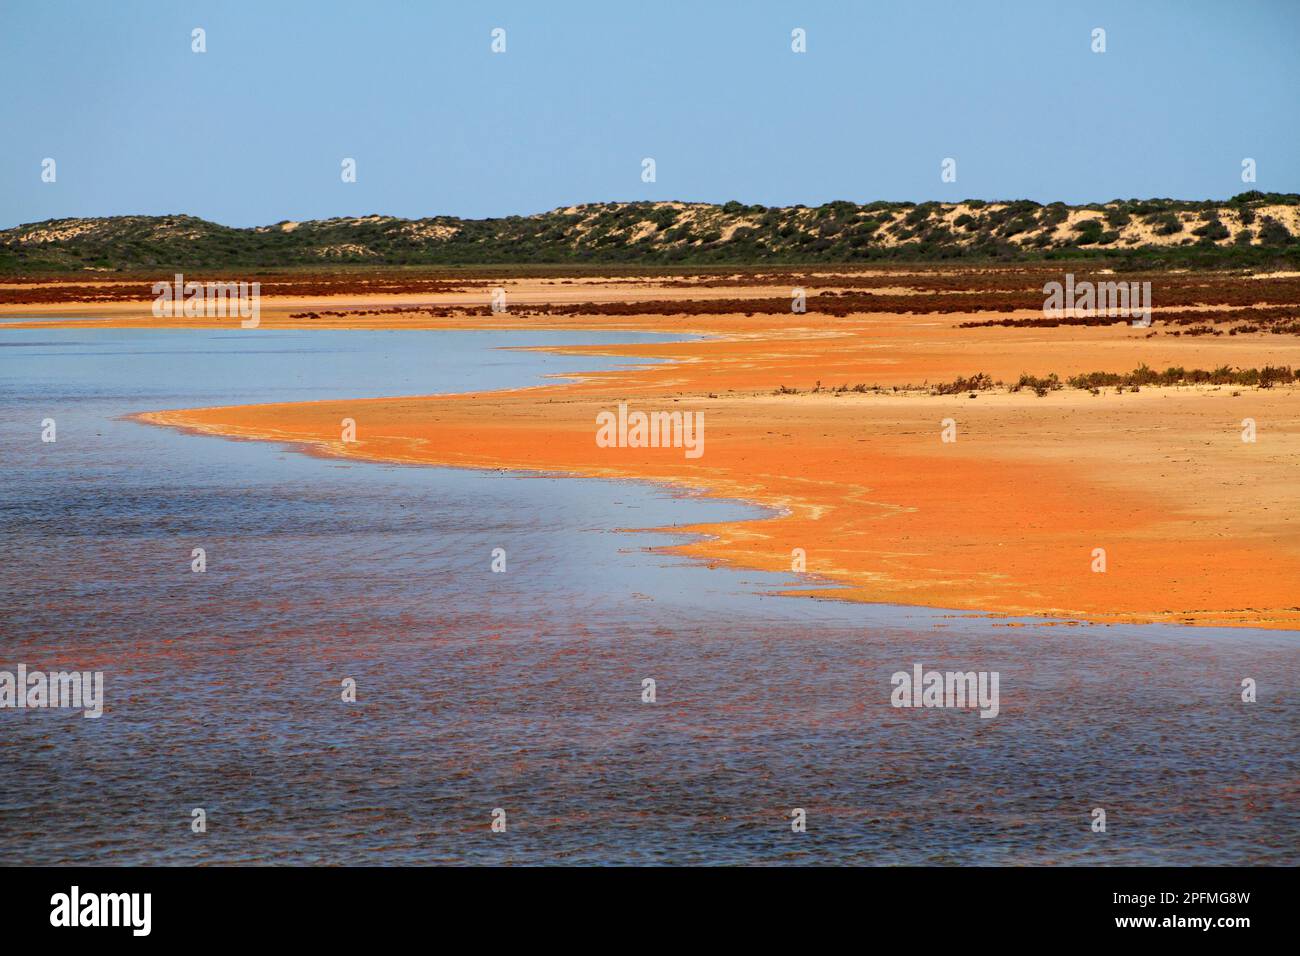 Red sandy coastline, Northwest Australia Stock Photo